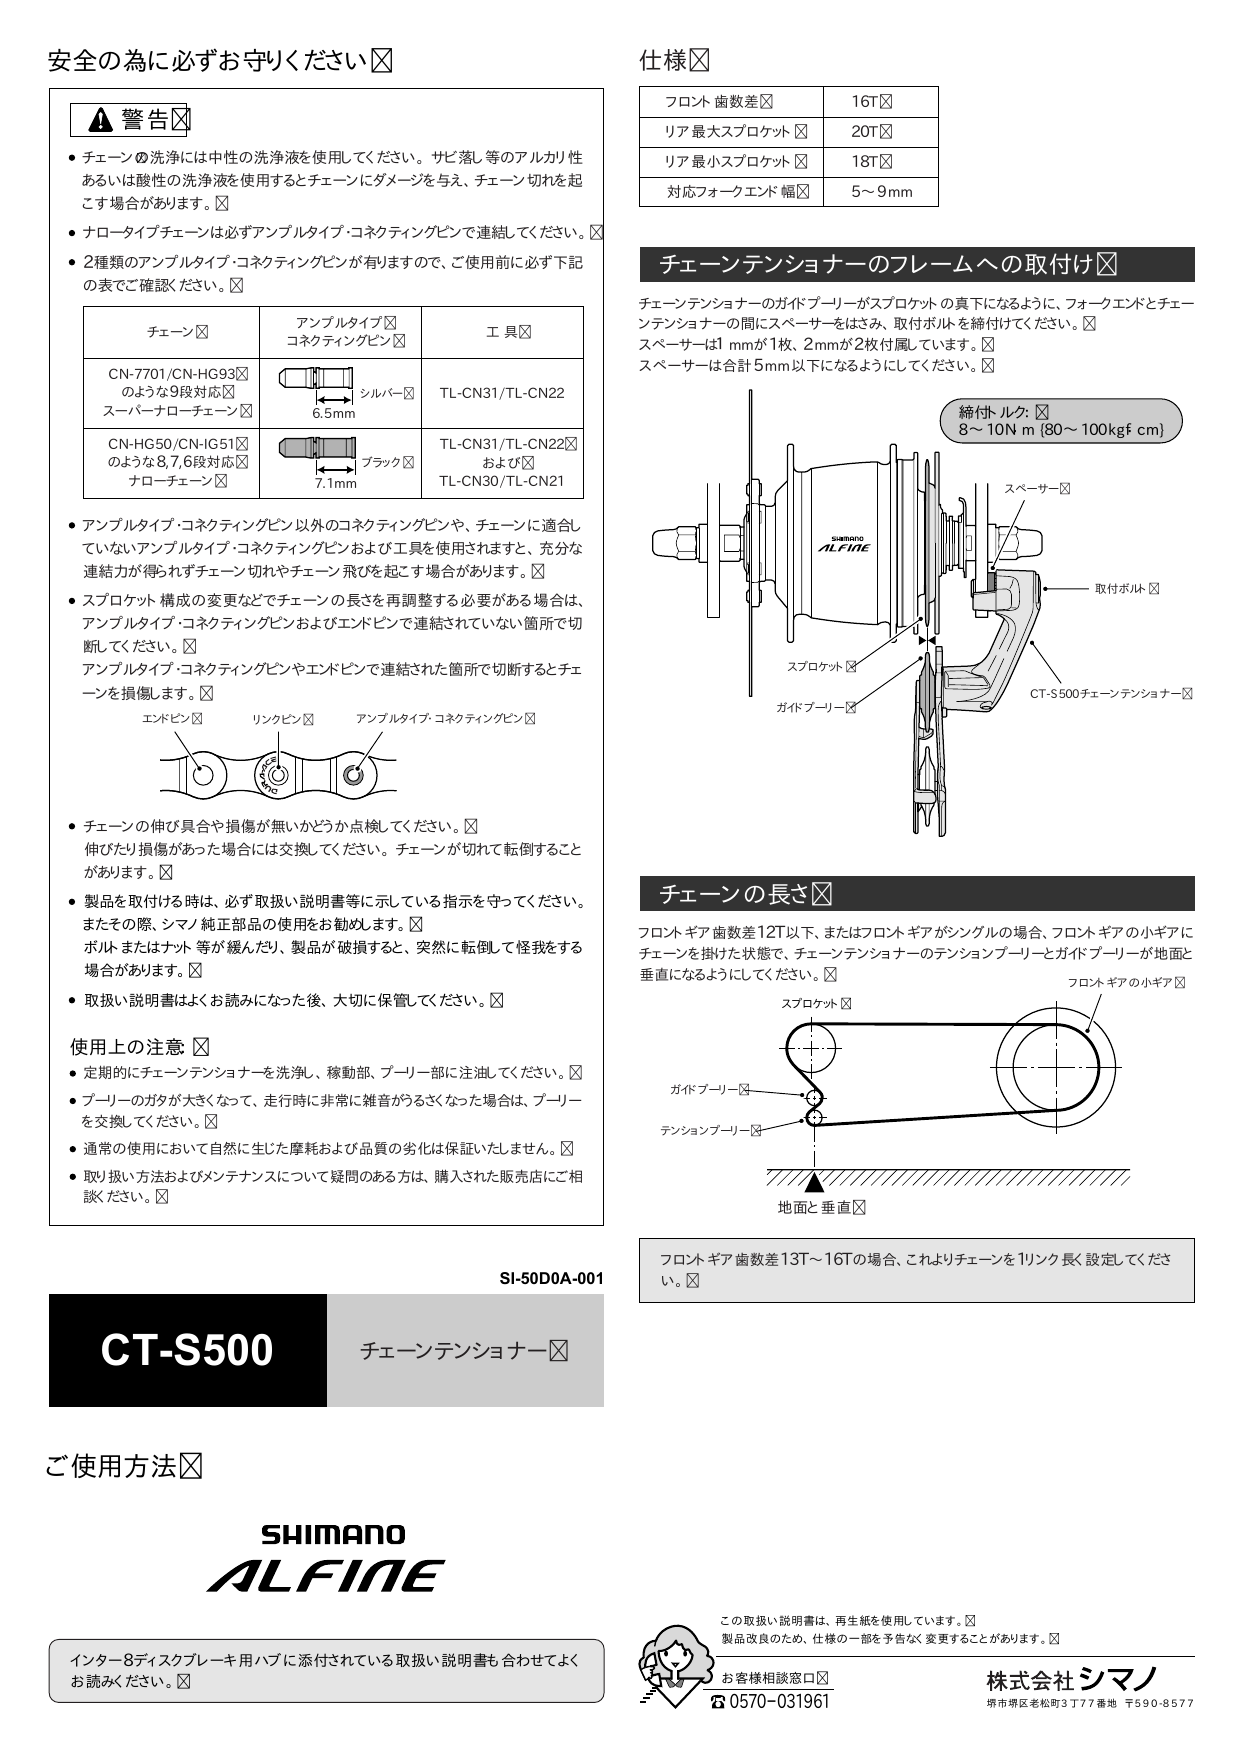 Shimano CT-S500 チェーンテンショナー ユーザーマニュアル | Manualzz